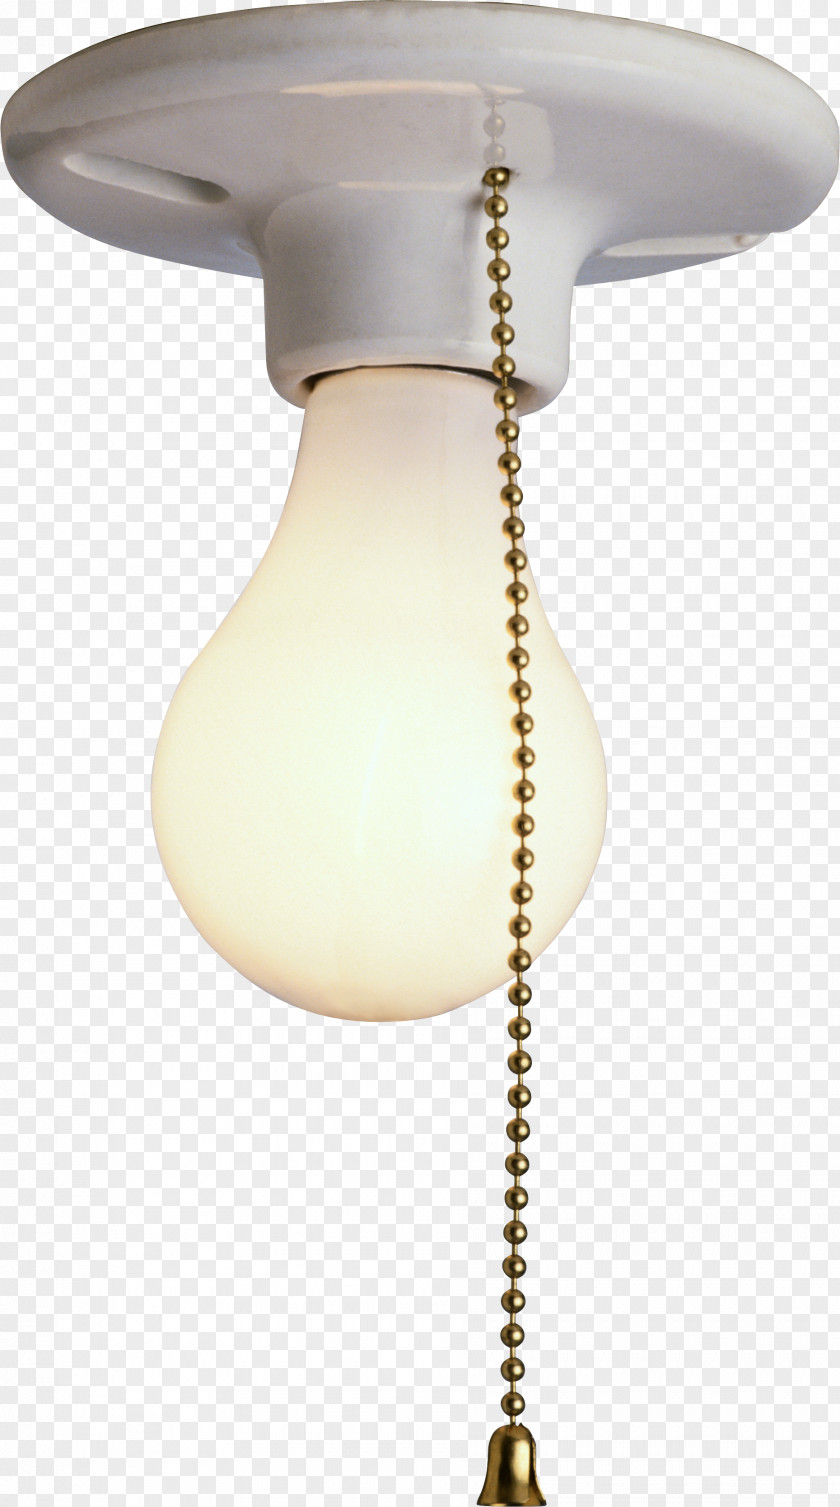 Bulb Incandescent Light Lighting Fixture Electrical Filament PNG